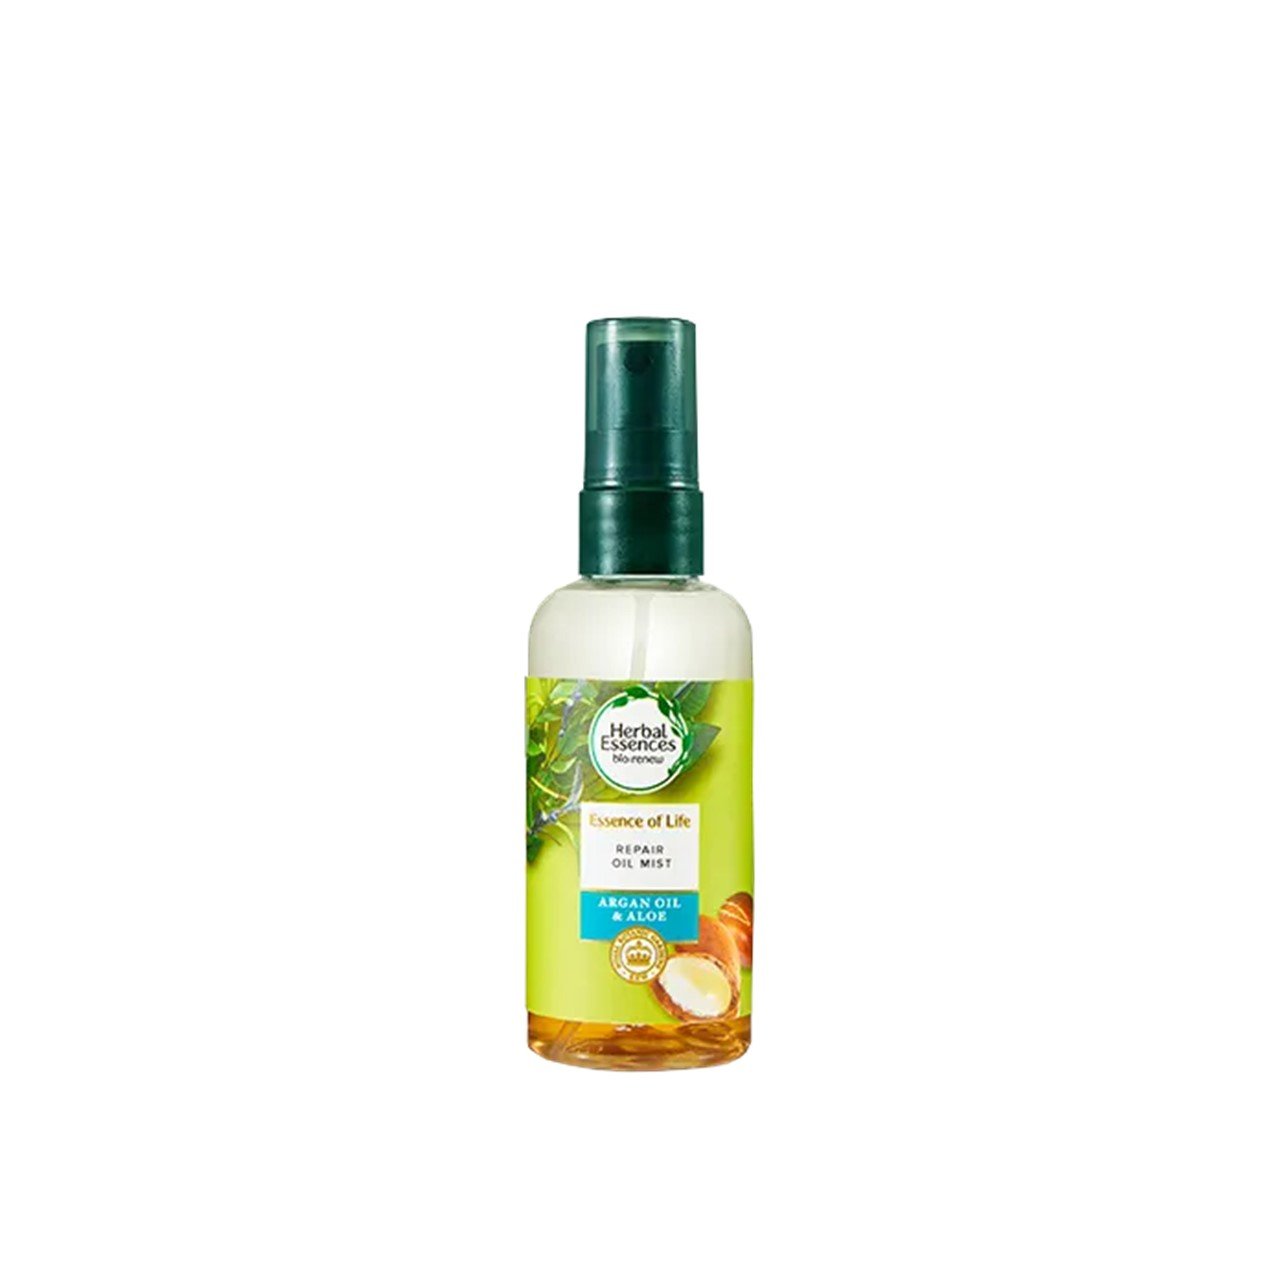 https://static.beautytocare.com/media/catalog/product/h/e/herbal-essences-bio-renew-repair-argan-oil-aloe-oil-hair-mist-100ml.jpg